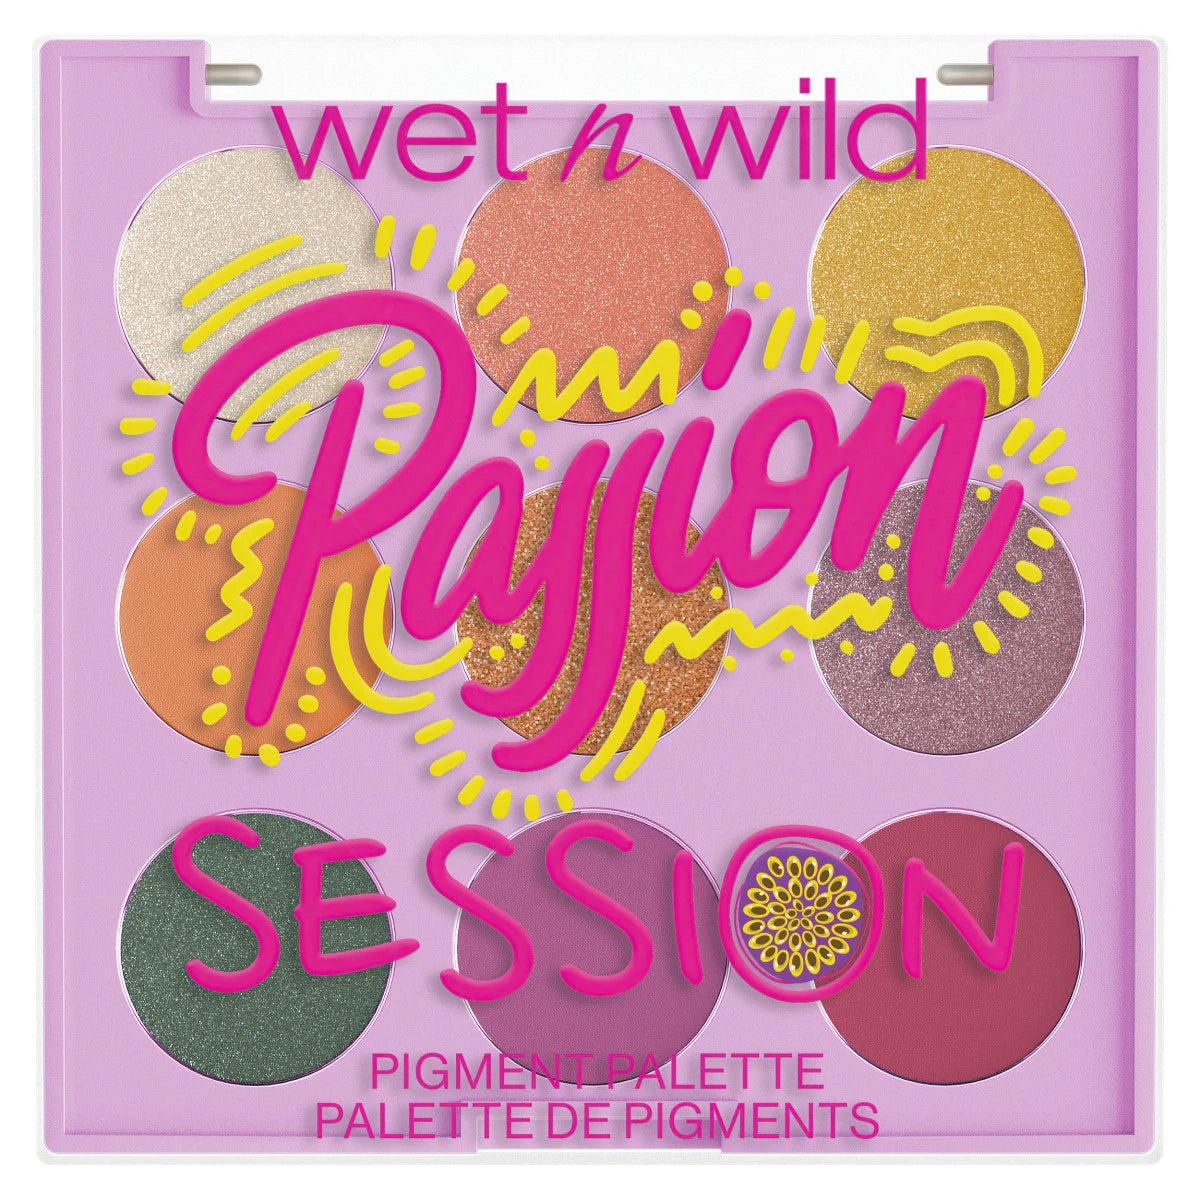 WET N WILD Passion Session Pigment Palette